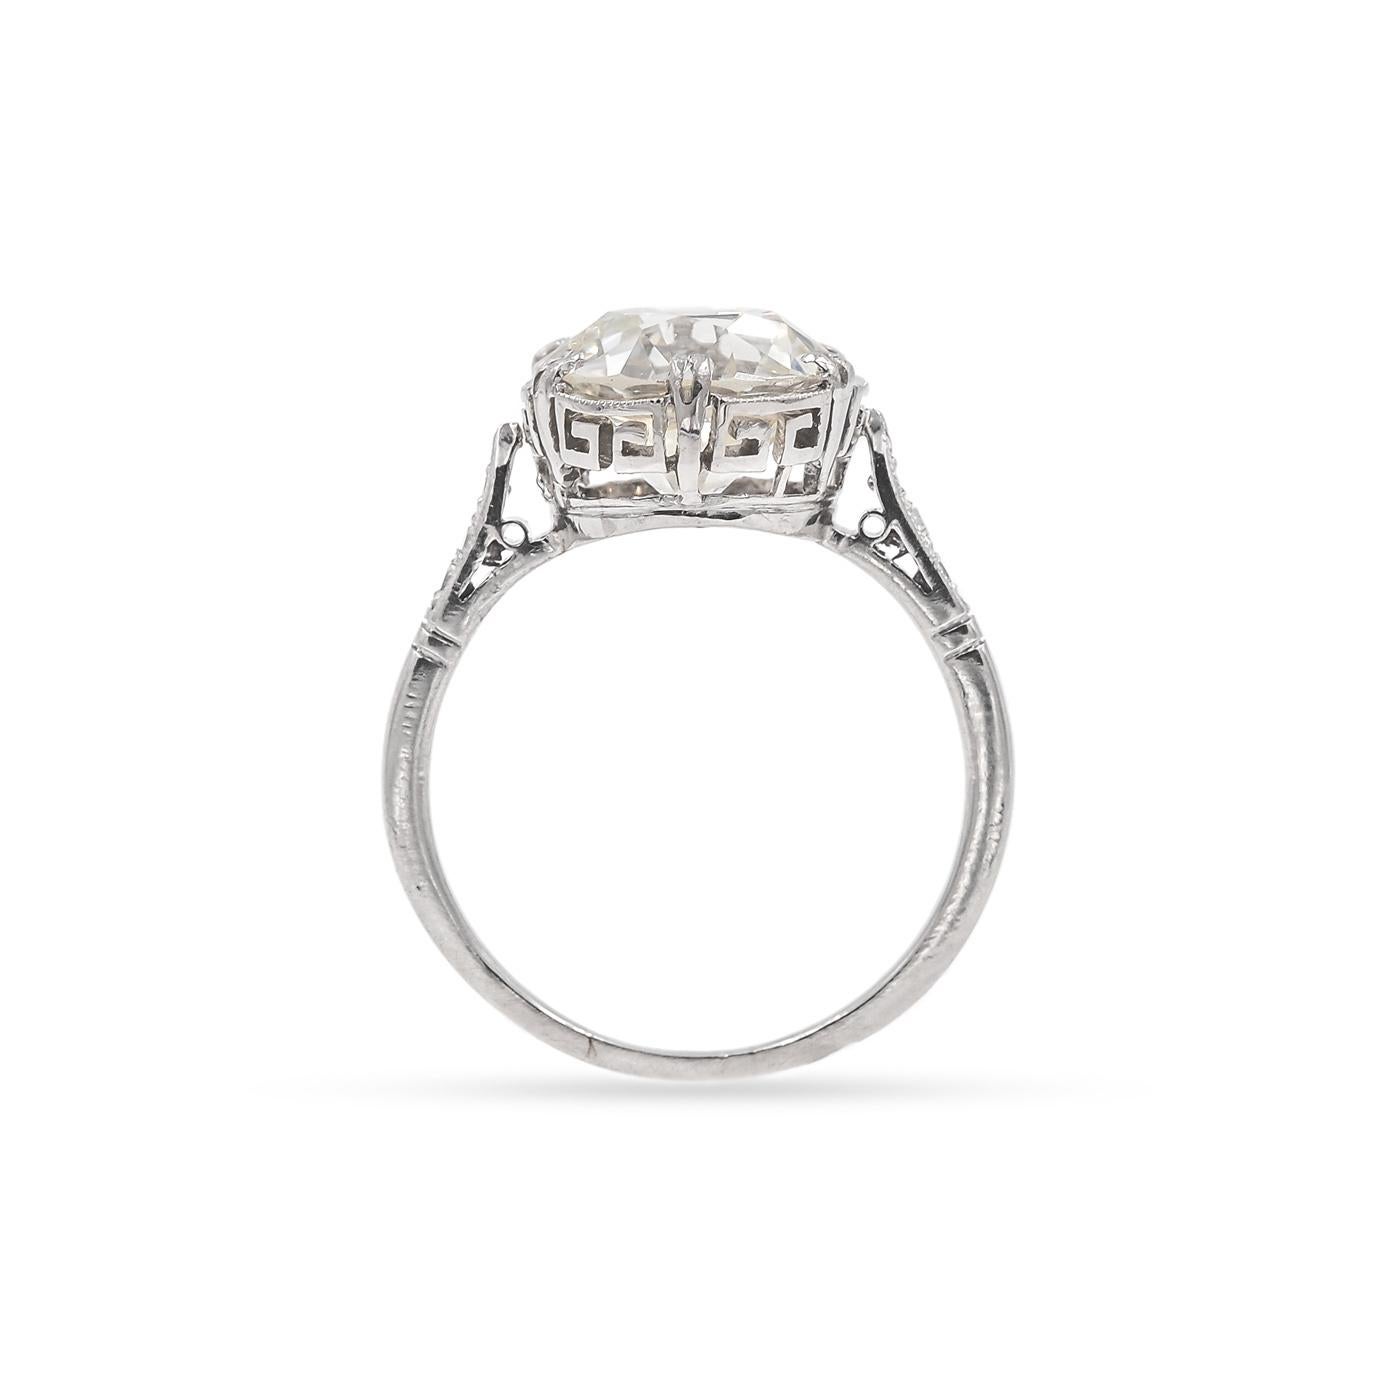 Women's French Art Deco 3.93 Carat Old European Cut Diamond Engagement Ring